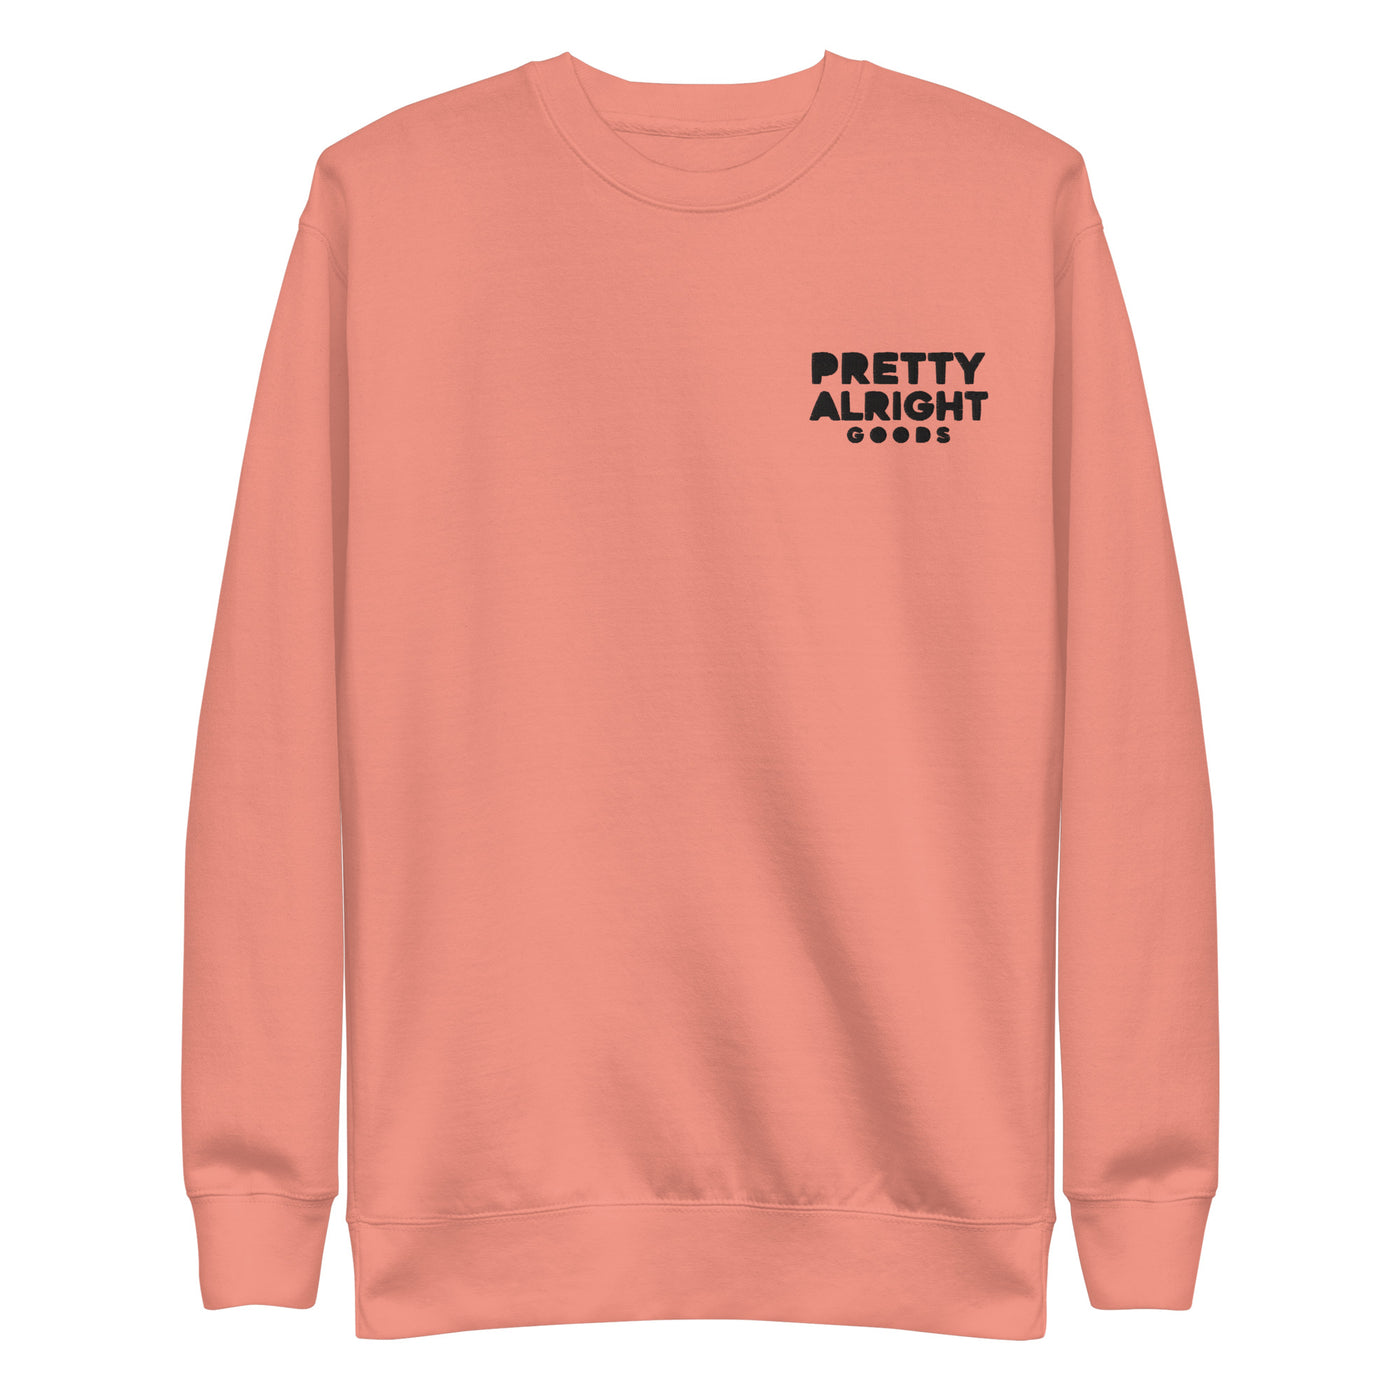 Pretty Alright Goods Unisex Premium Sweatshirt